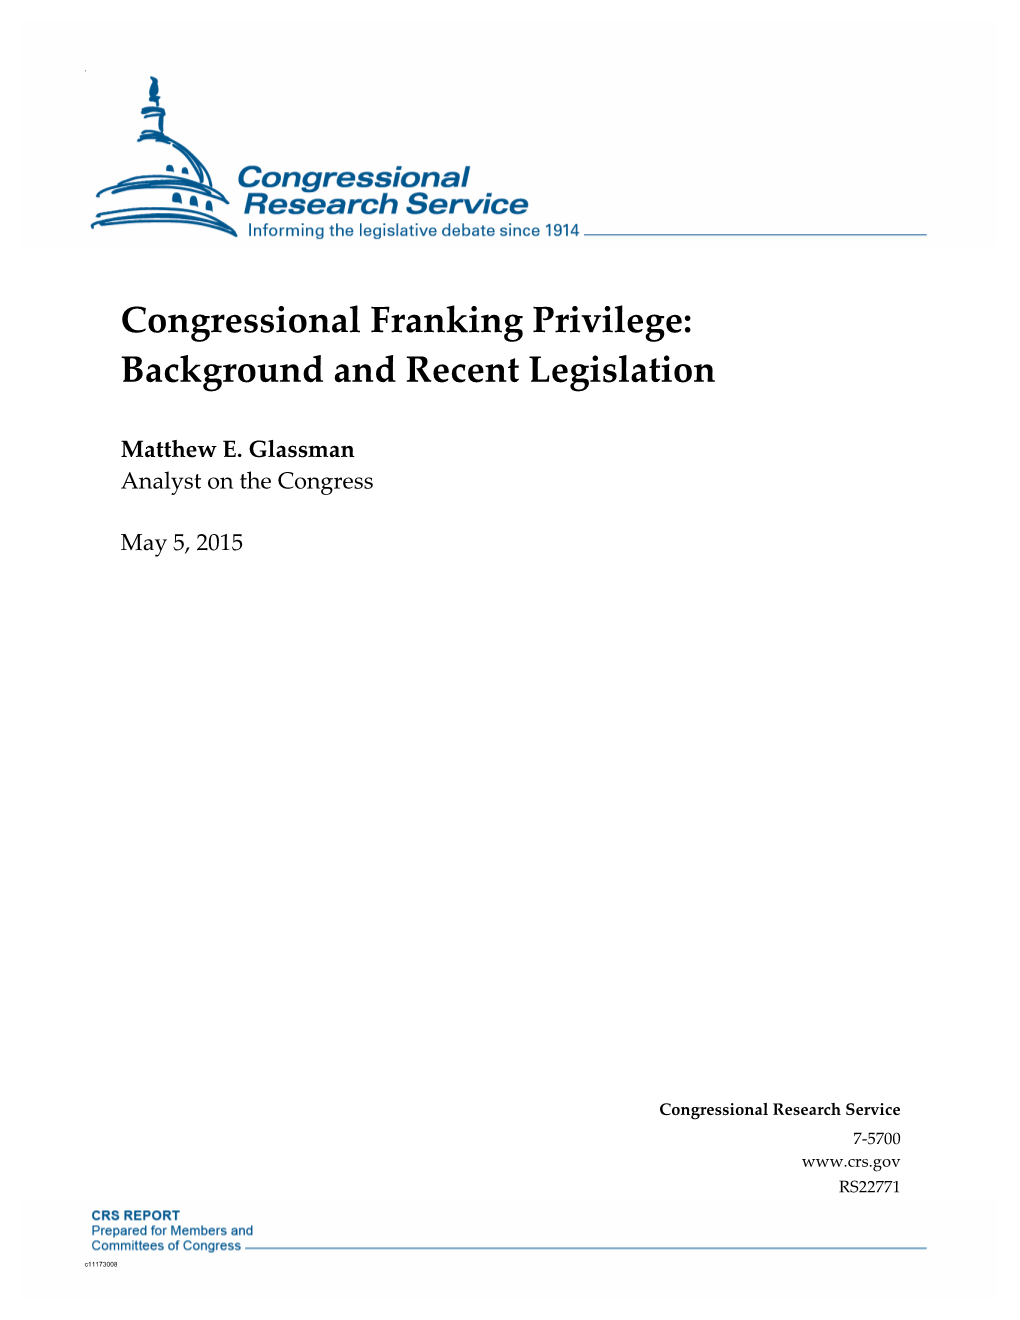 Congressional Franking Privilege: Background and Recent Legislation